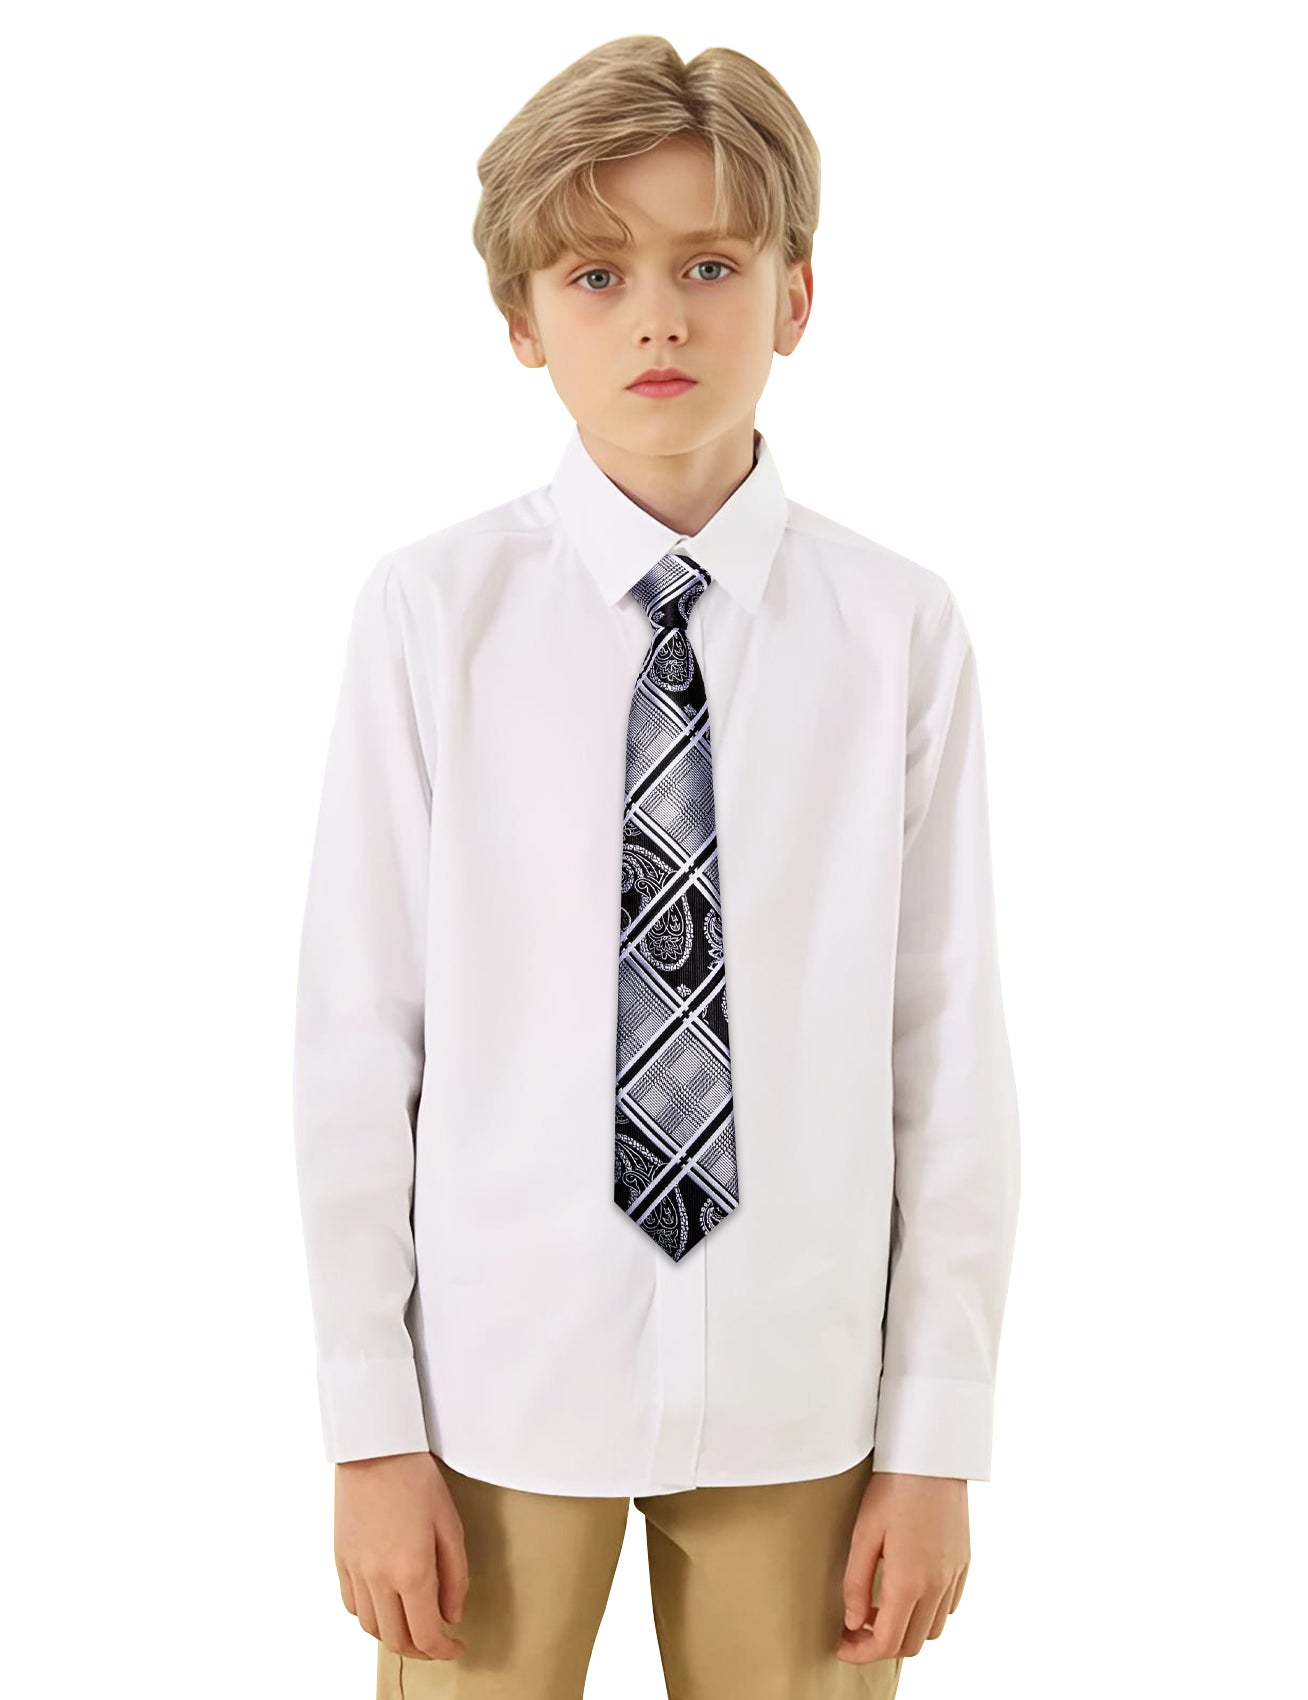 Barry.wang Kids Tie Black White Floral Children's Silk Tie Hanky Set